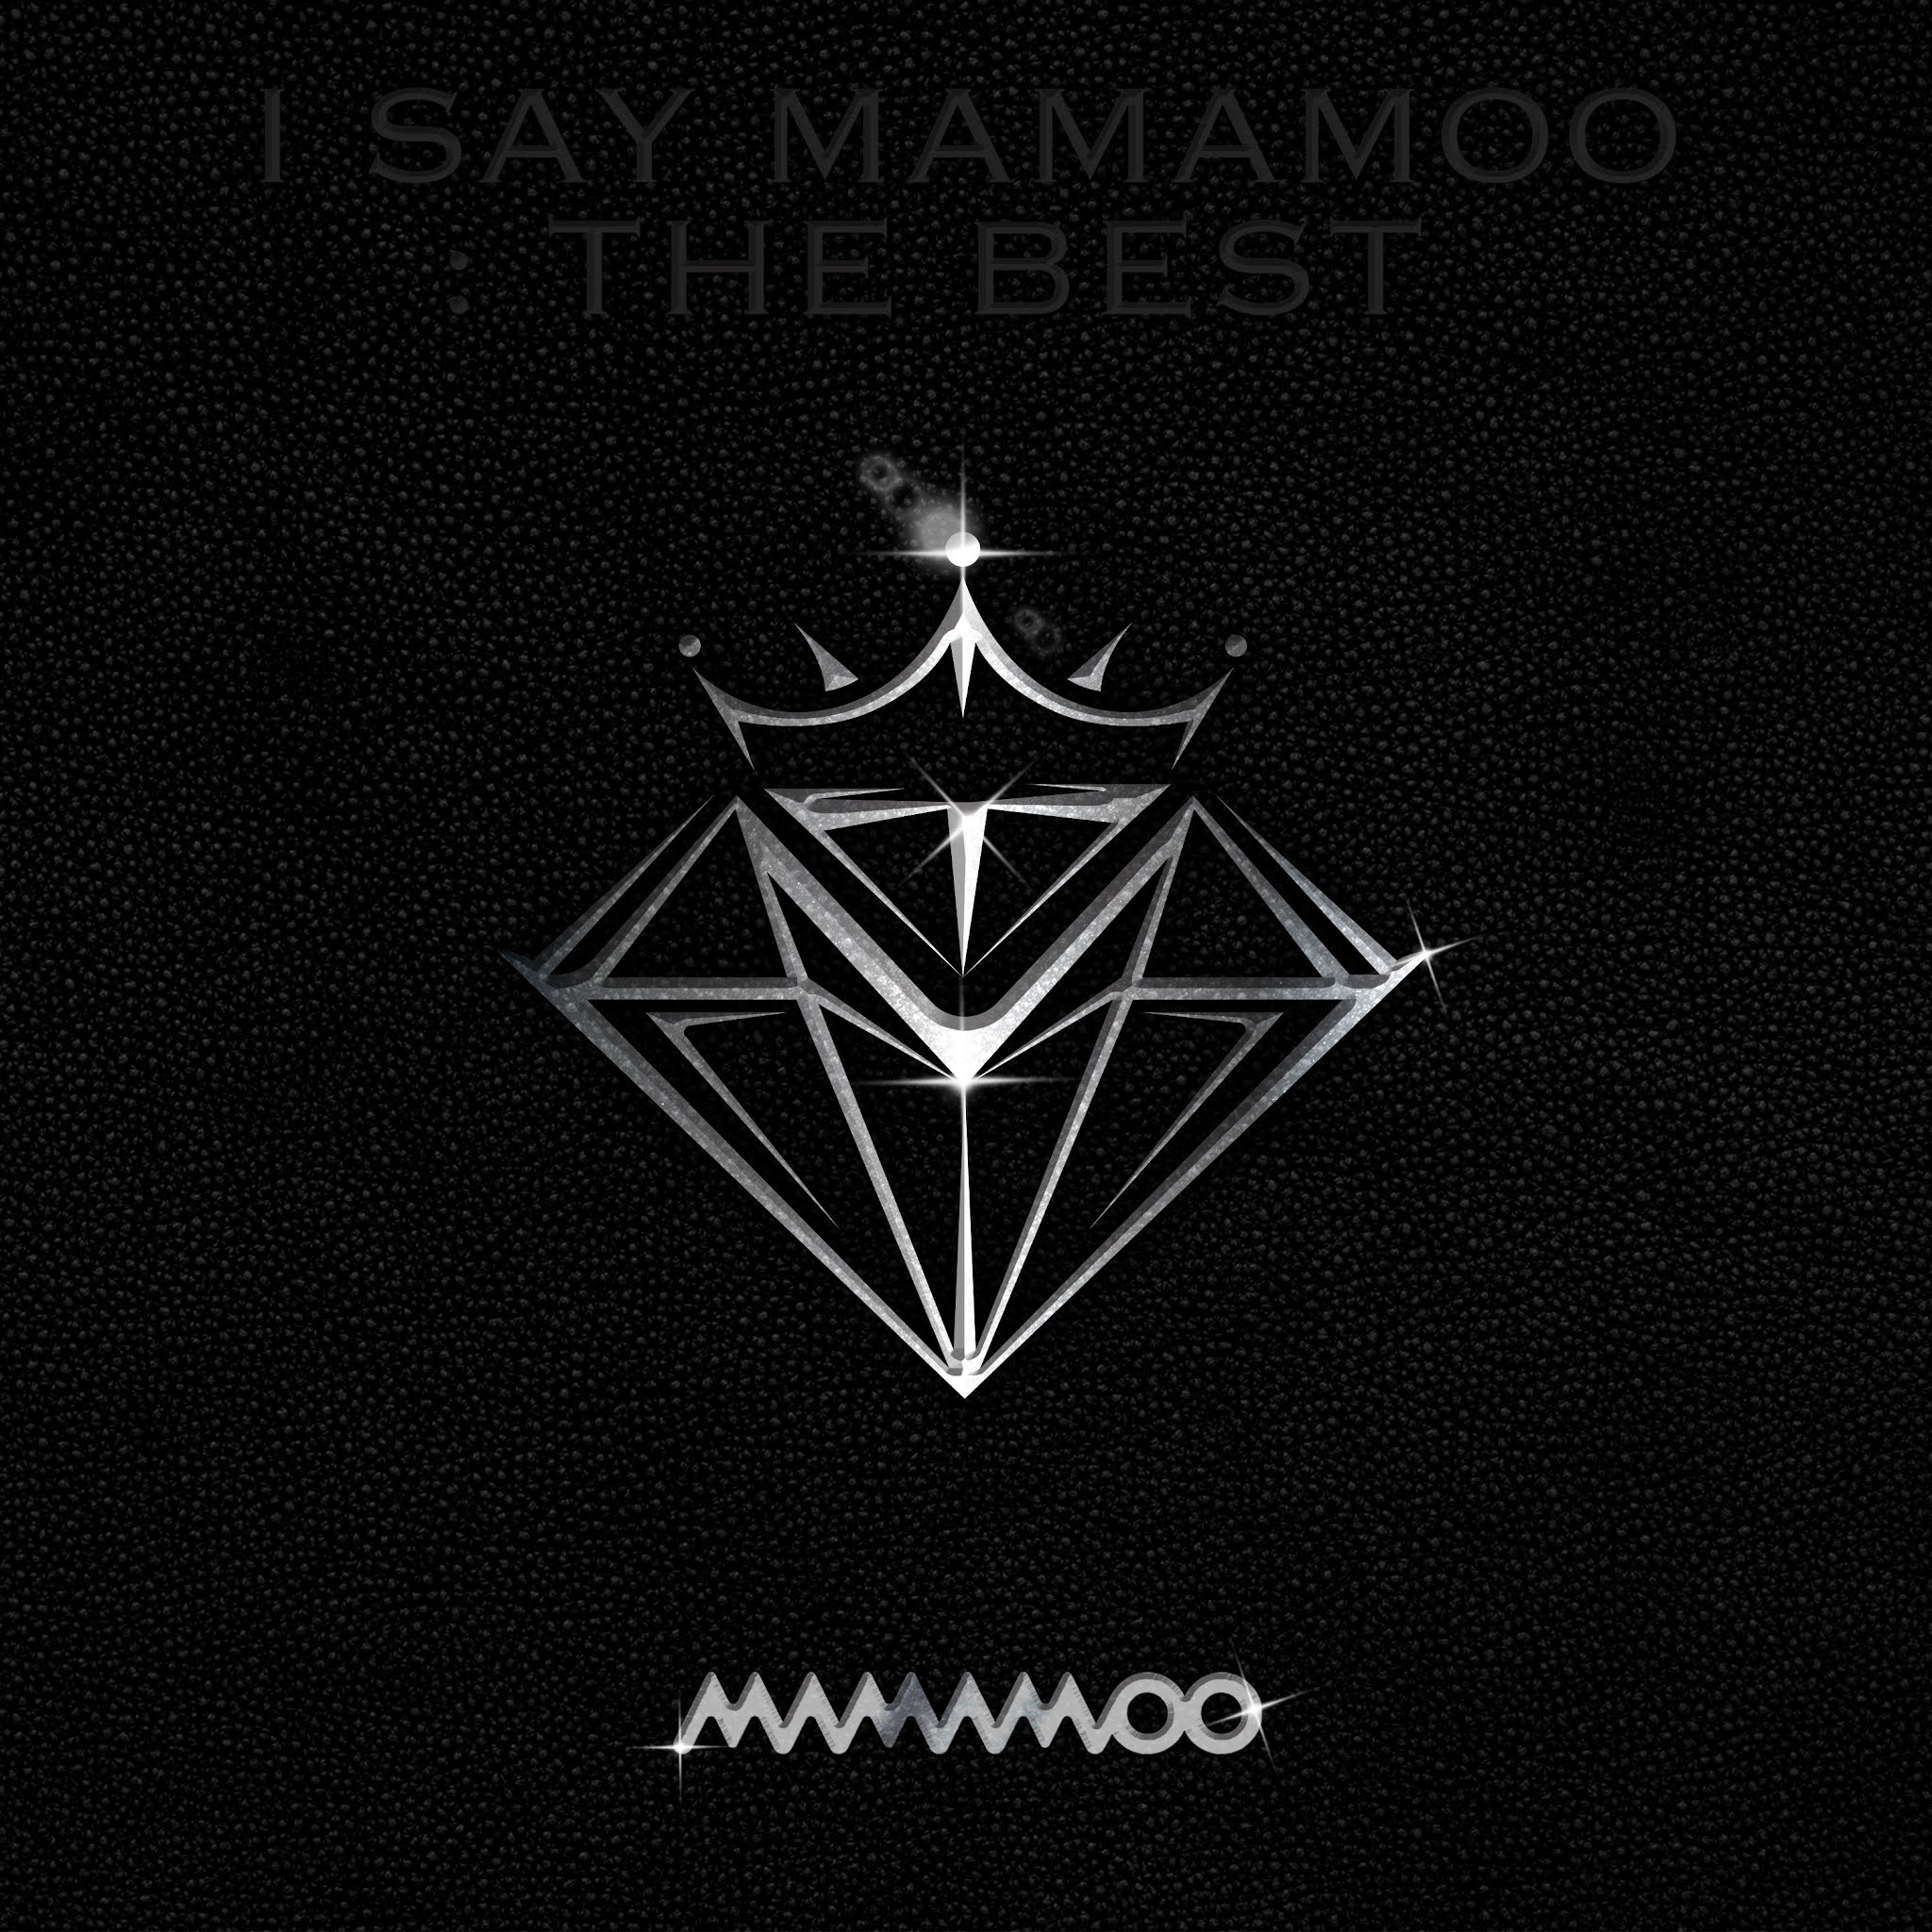 Mamamoo - I SAY MAMAMOO : THE BEST